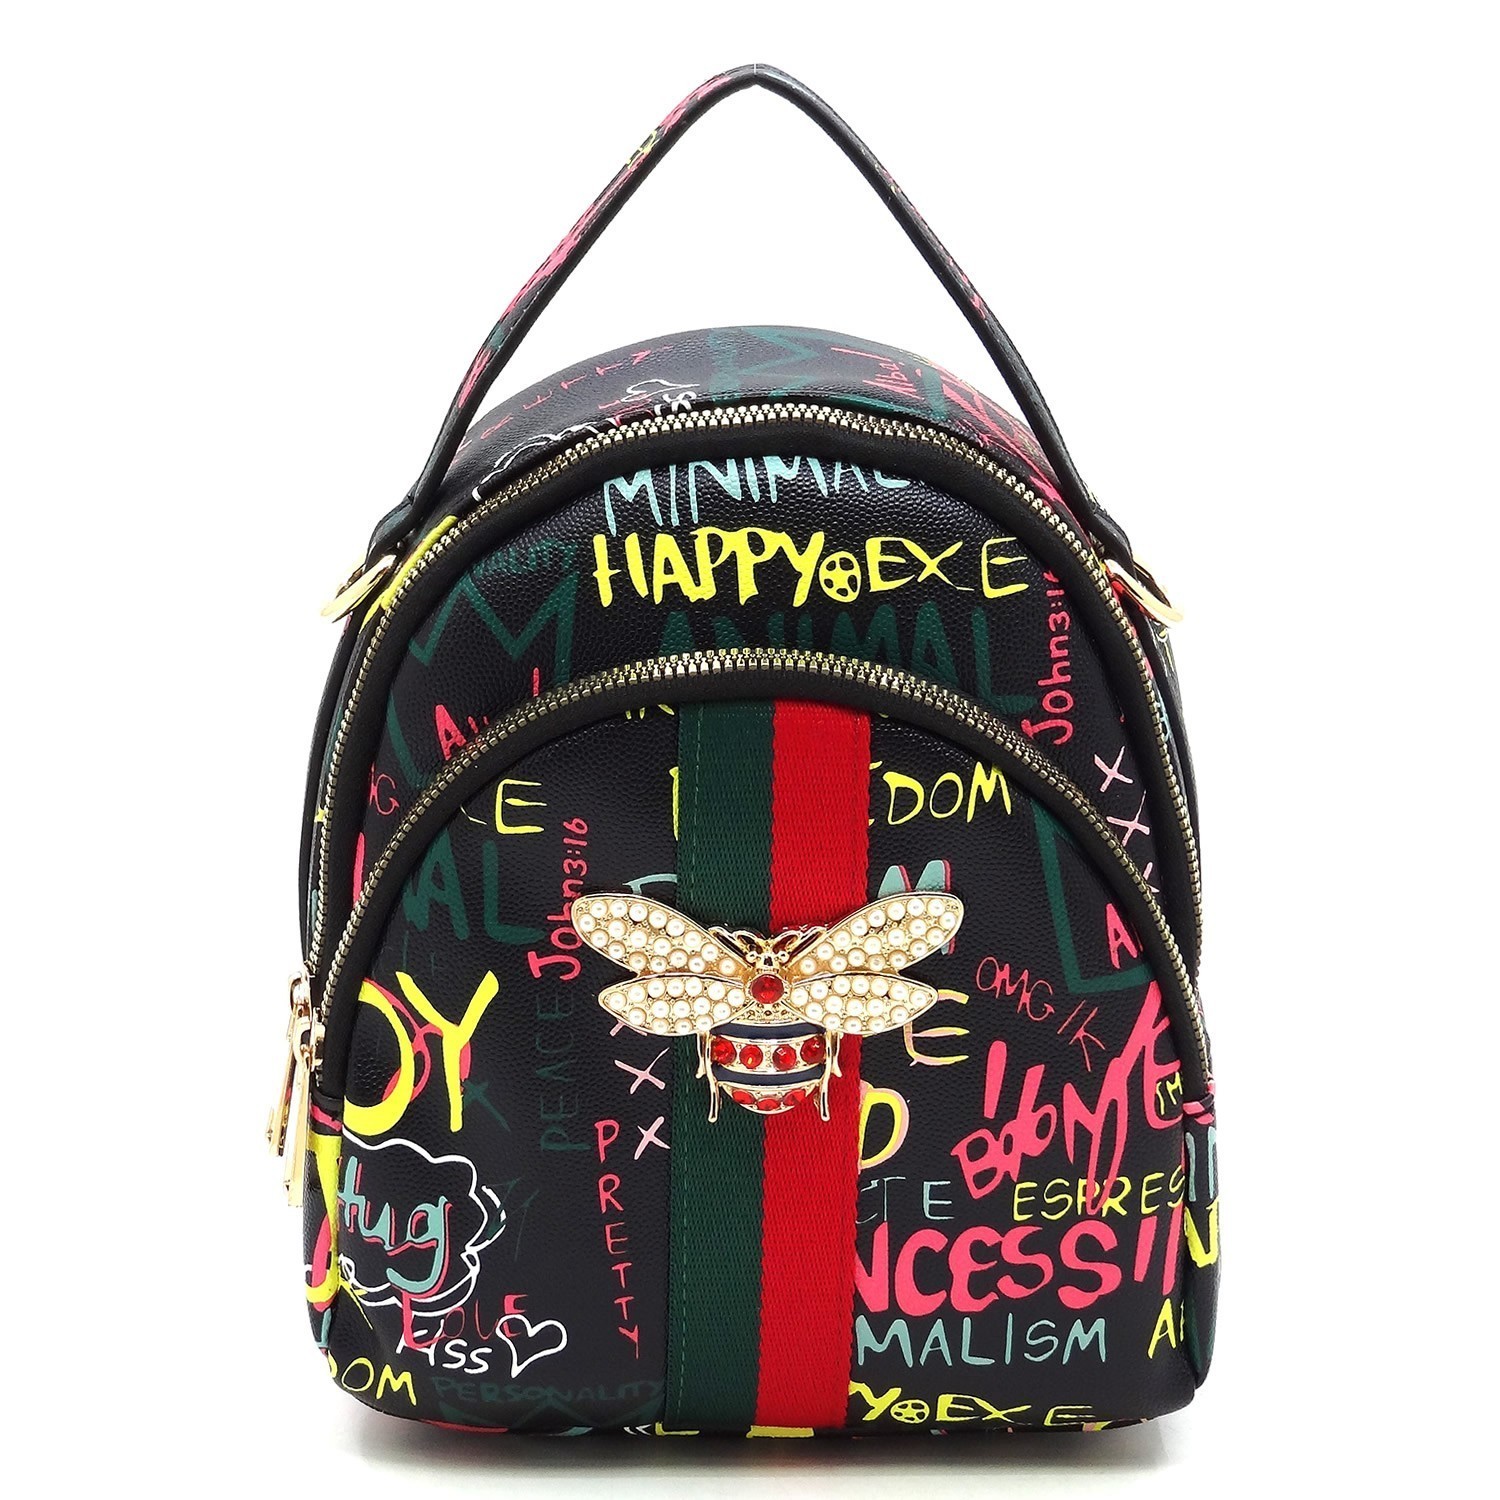 Queen Bee Stripe Graffiti Mini Crossbody Bag wholesaler > Wallets > Mezon  Handbags